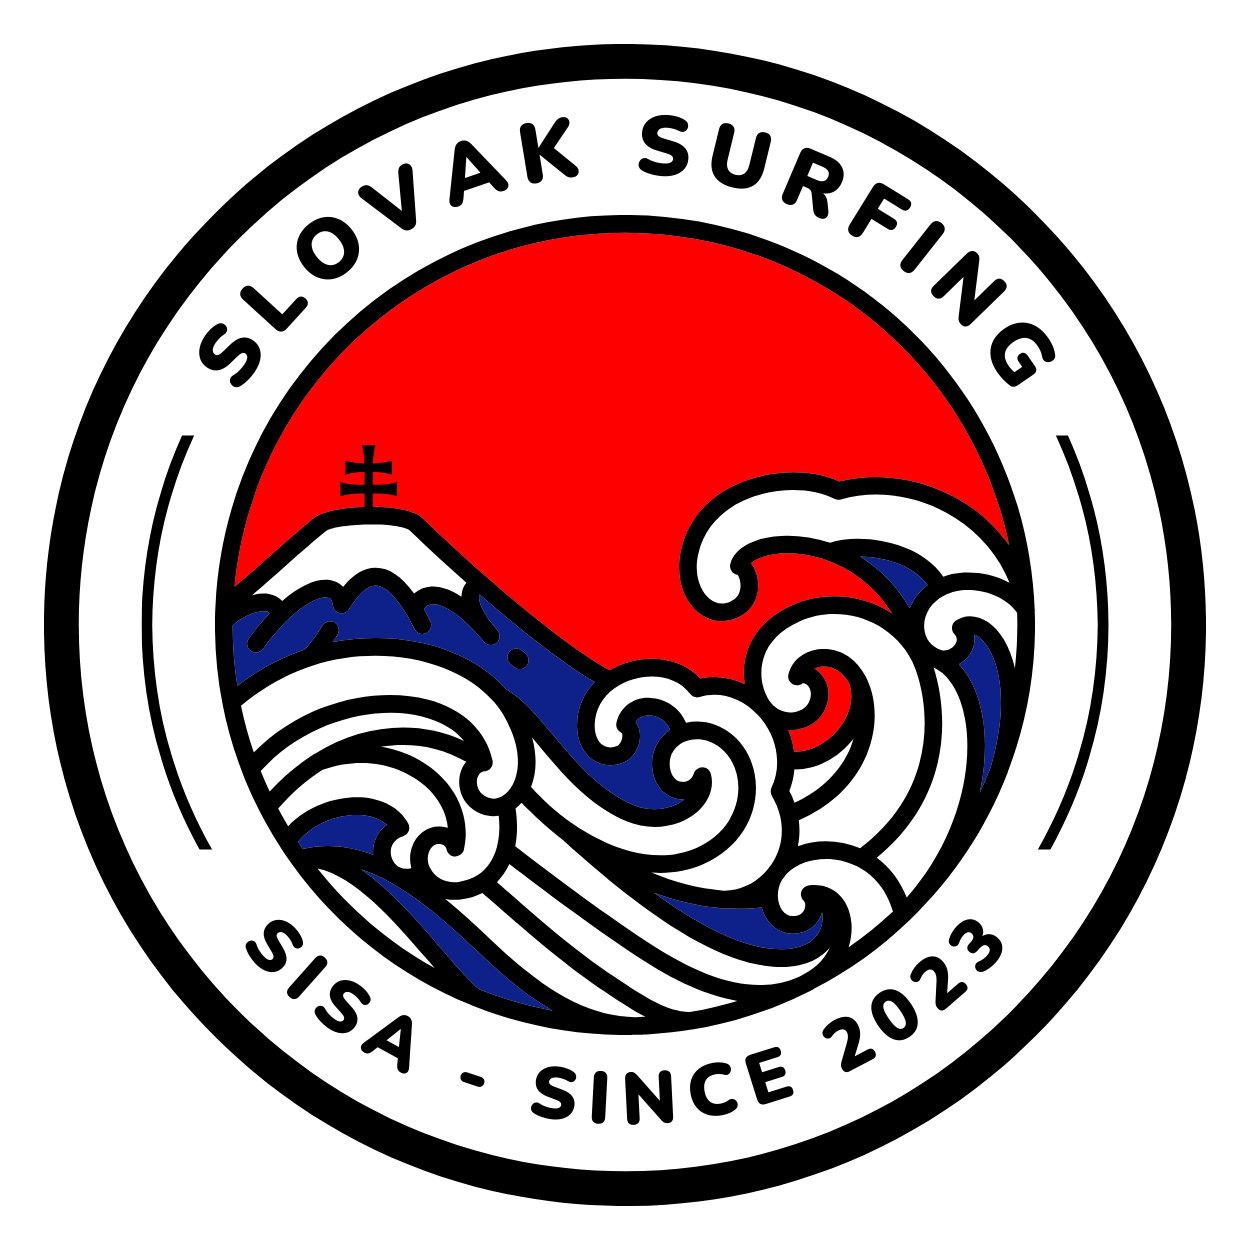 Slovak surf logo